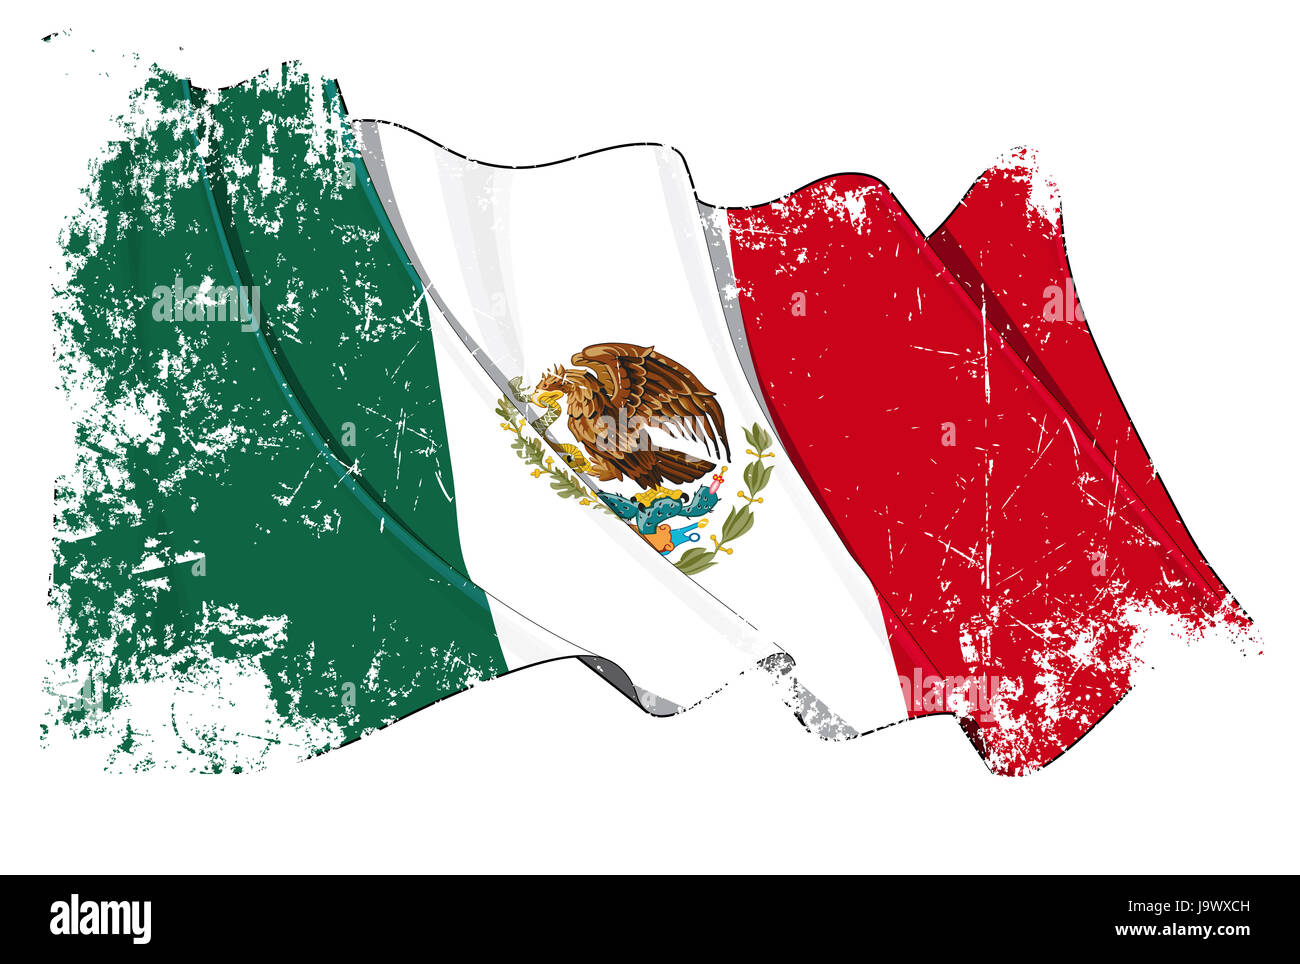 central america, flag, mexico, green, central america, illustration, capital, Stock Photo